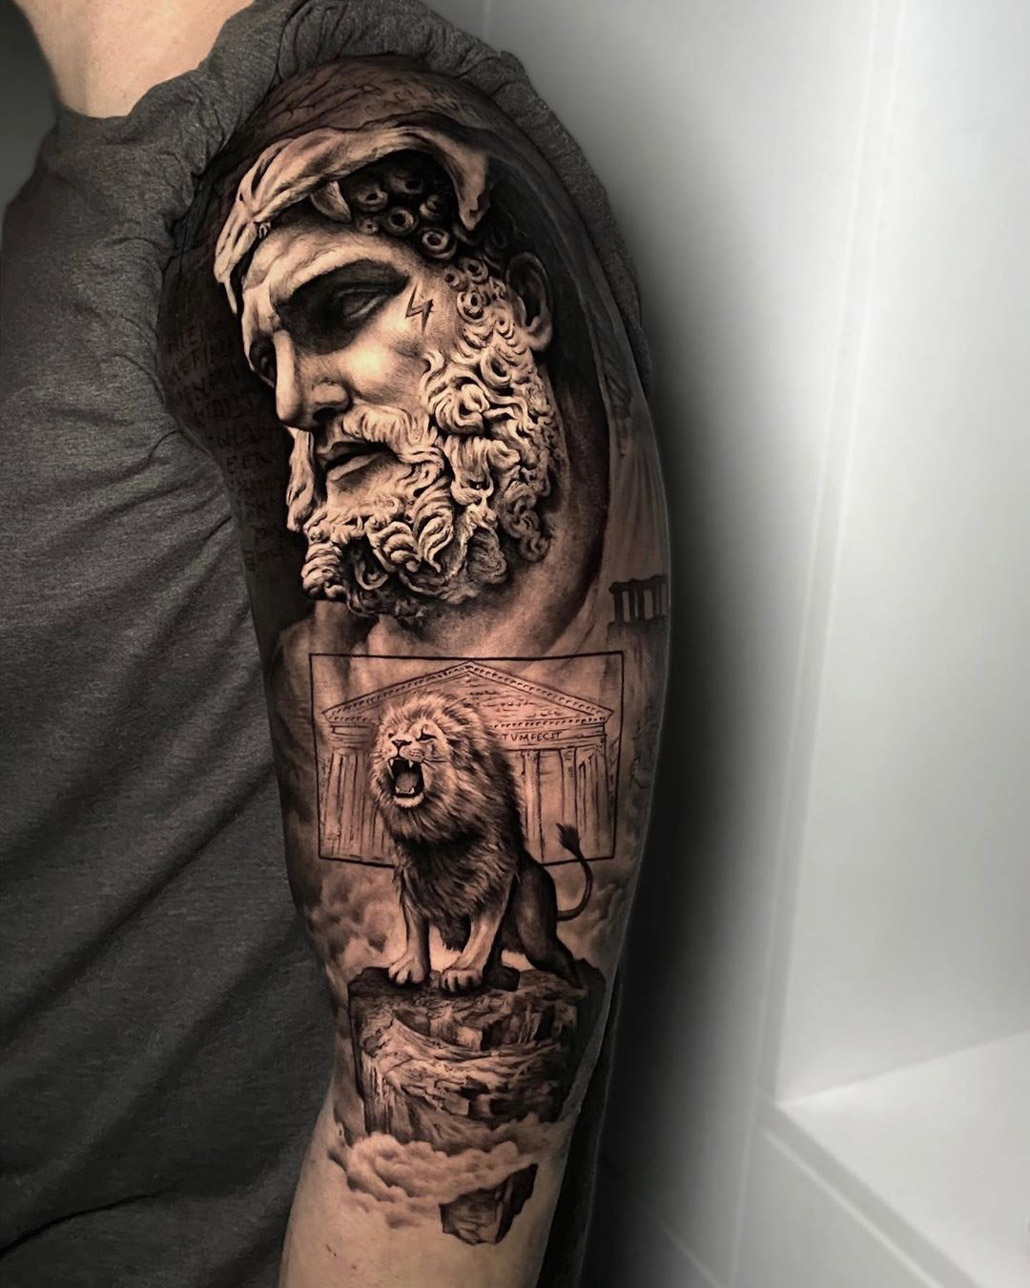 10 Best Hercules and Lion Tattoo Designs  PetPress